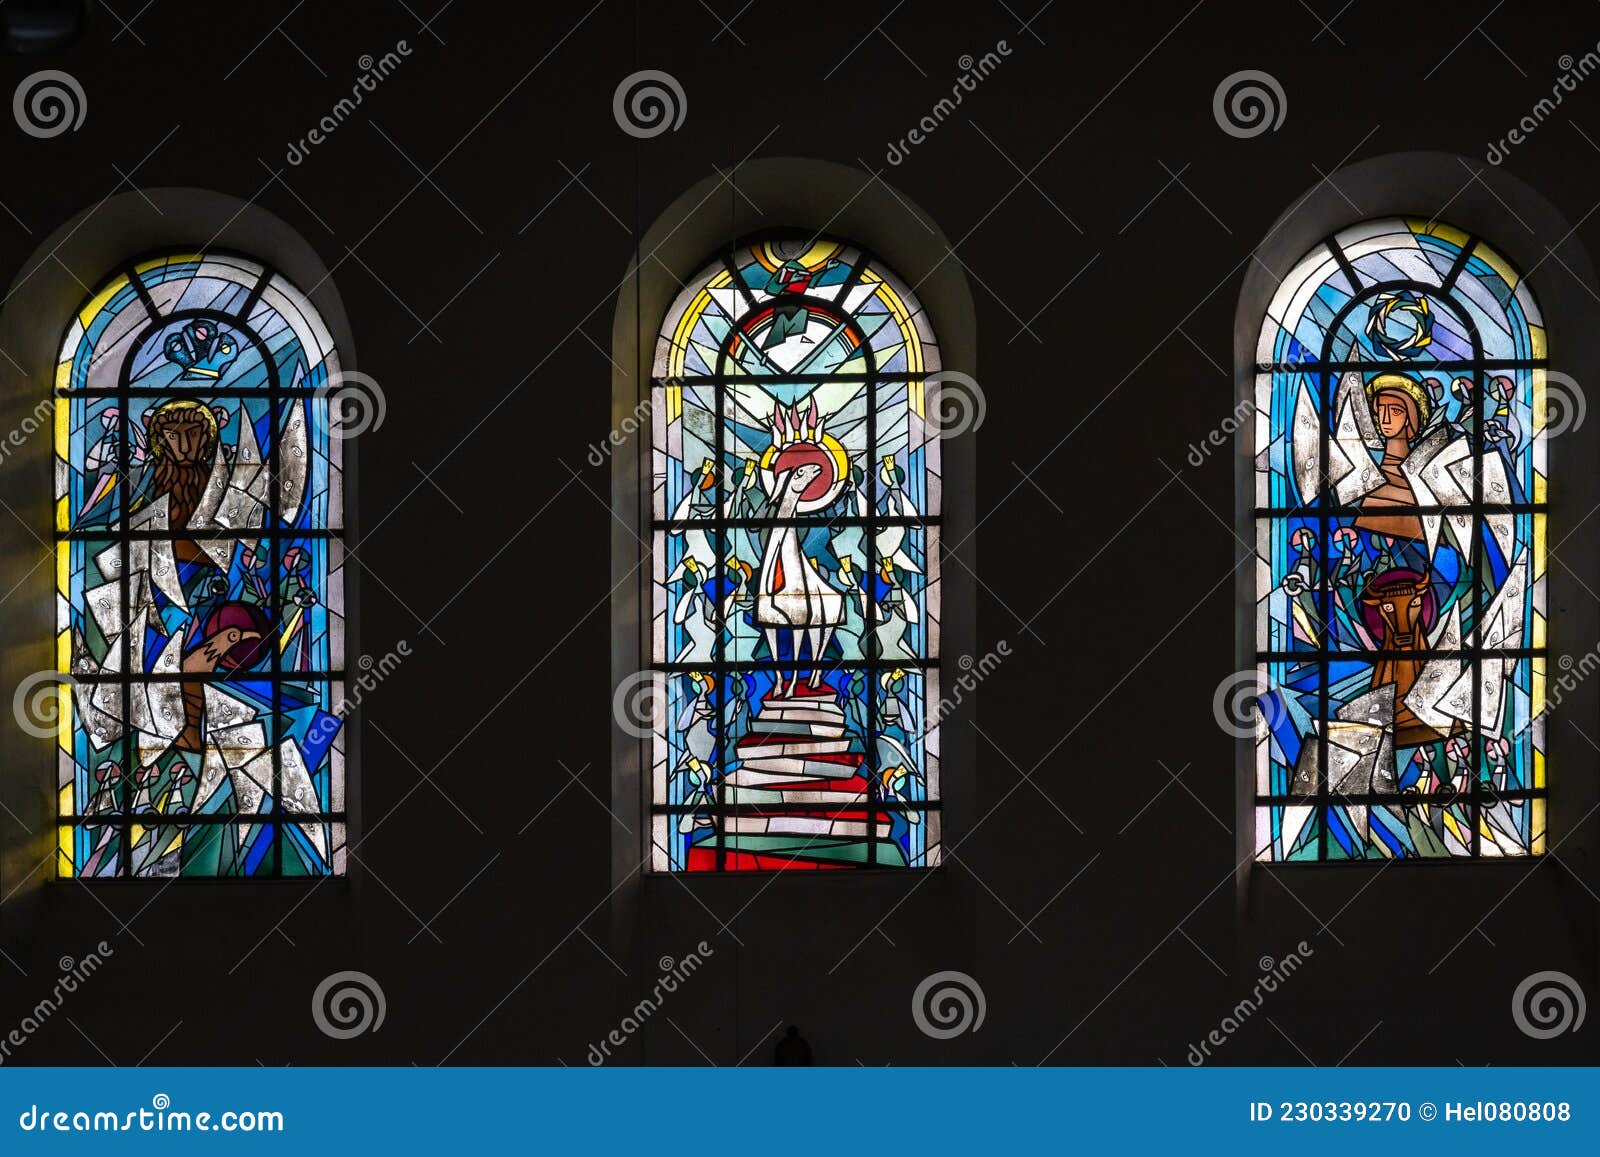 Iglesia catolica con ventanas de colores Stock Photo